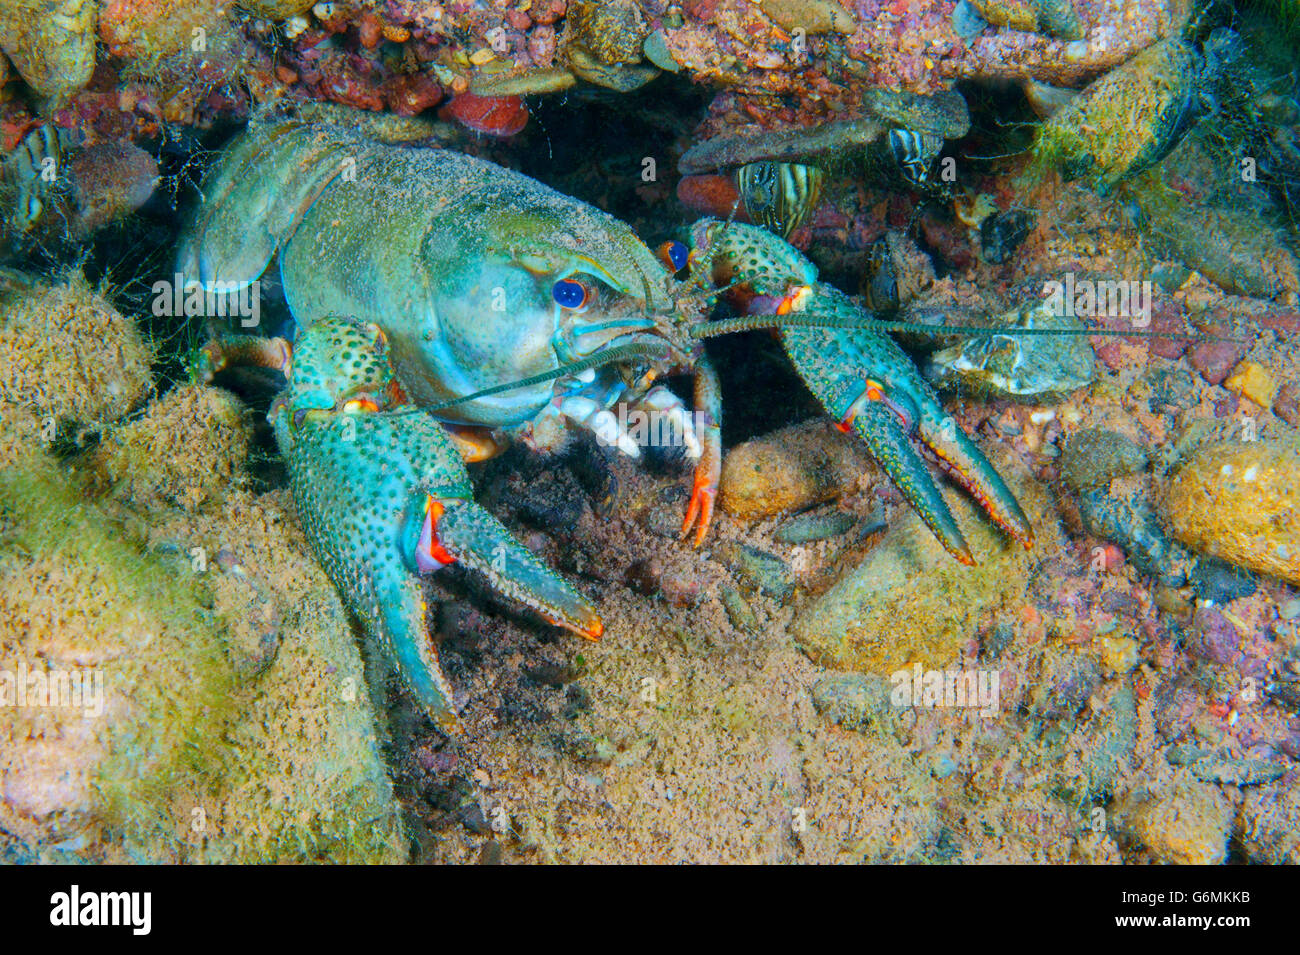 European Crayfish, blue variety, Thuringia, Germany / (Astacus astacus) Stock Photo